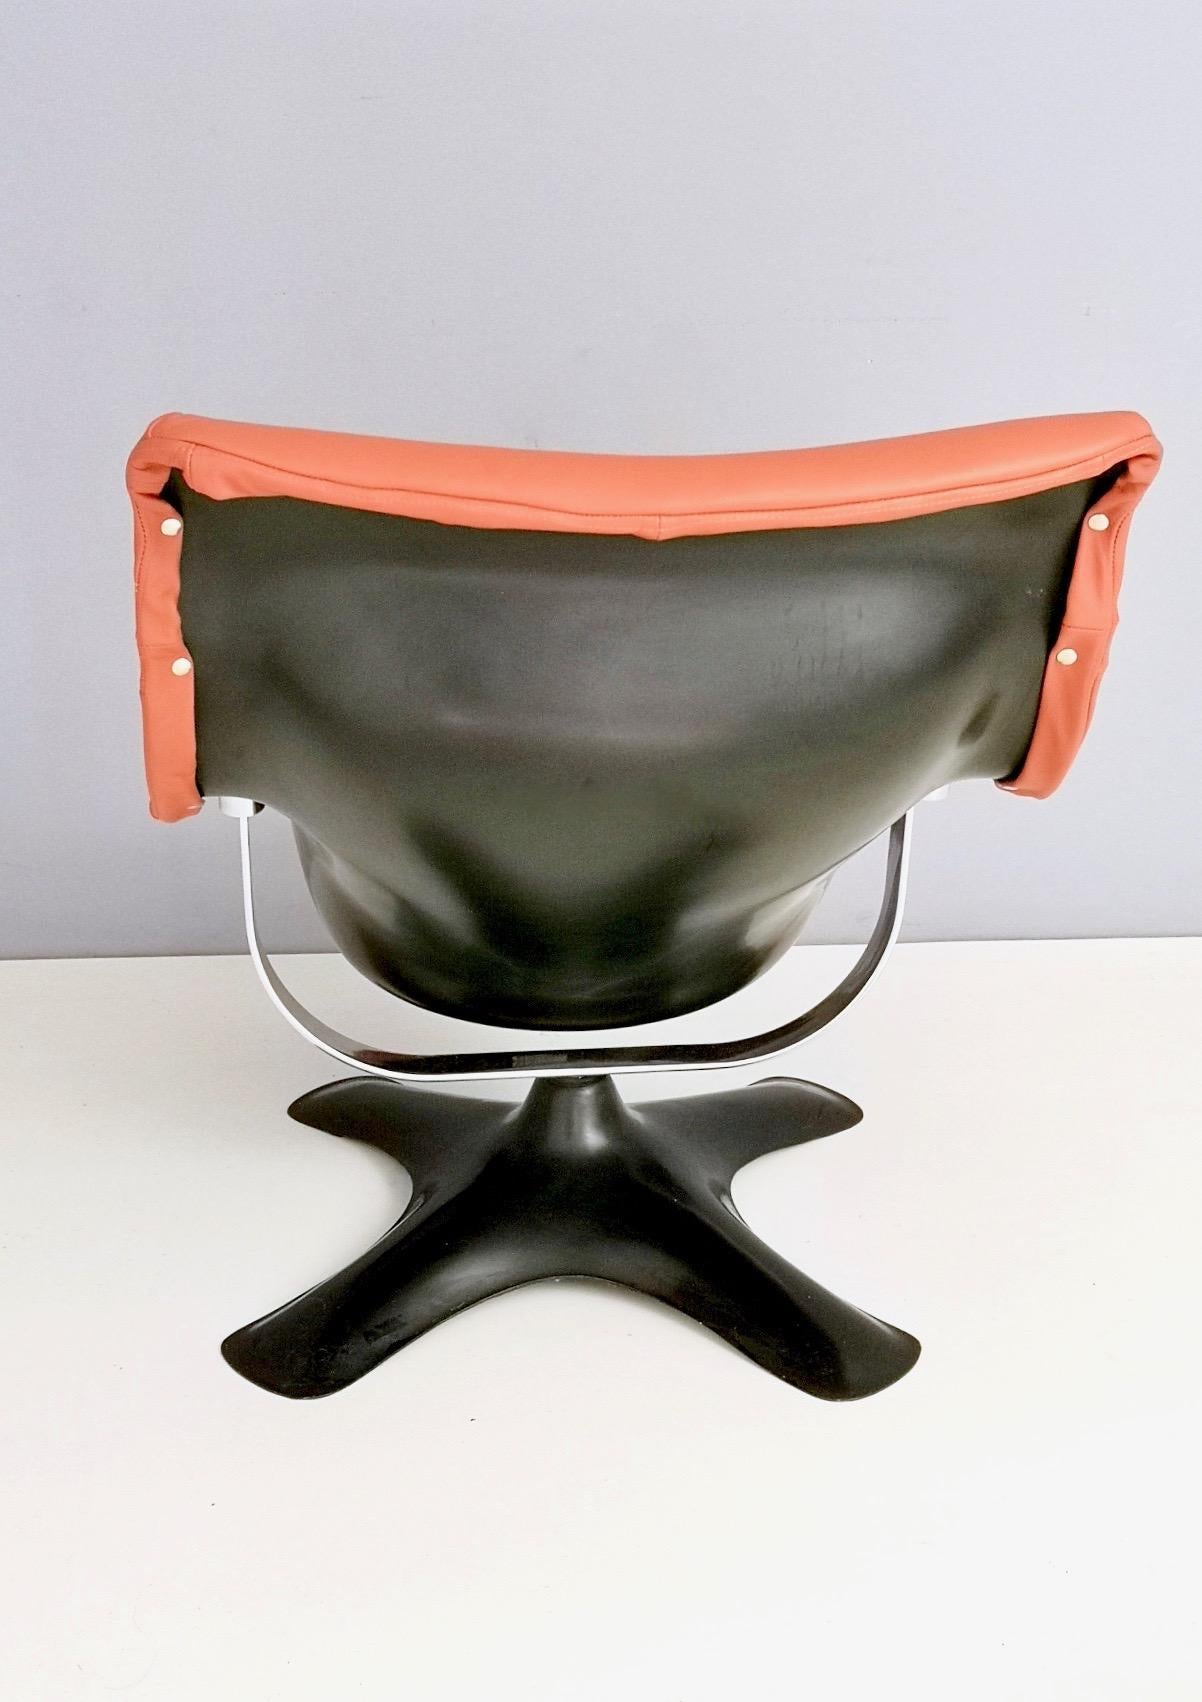 Finnish Karuselli Lounge Chair by Yrjö Kukkapuro for Haimi in Orange Leather, 1960s